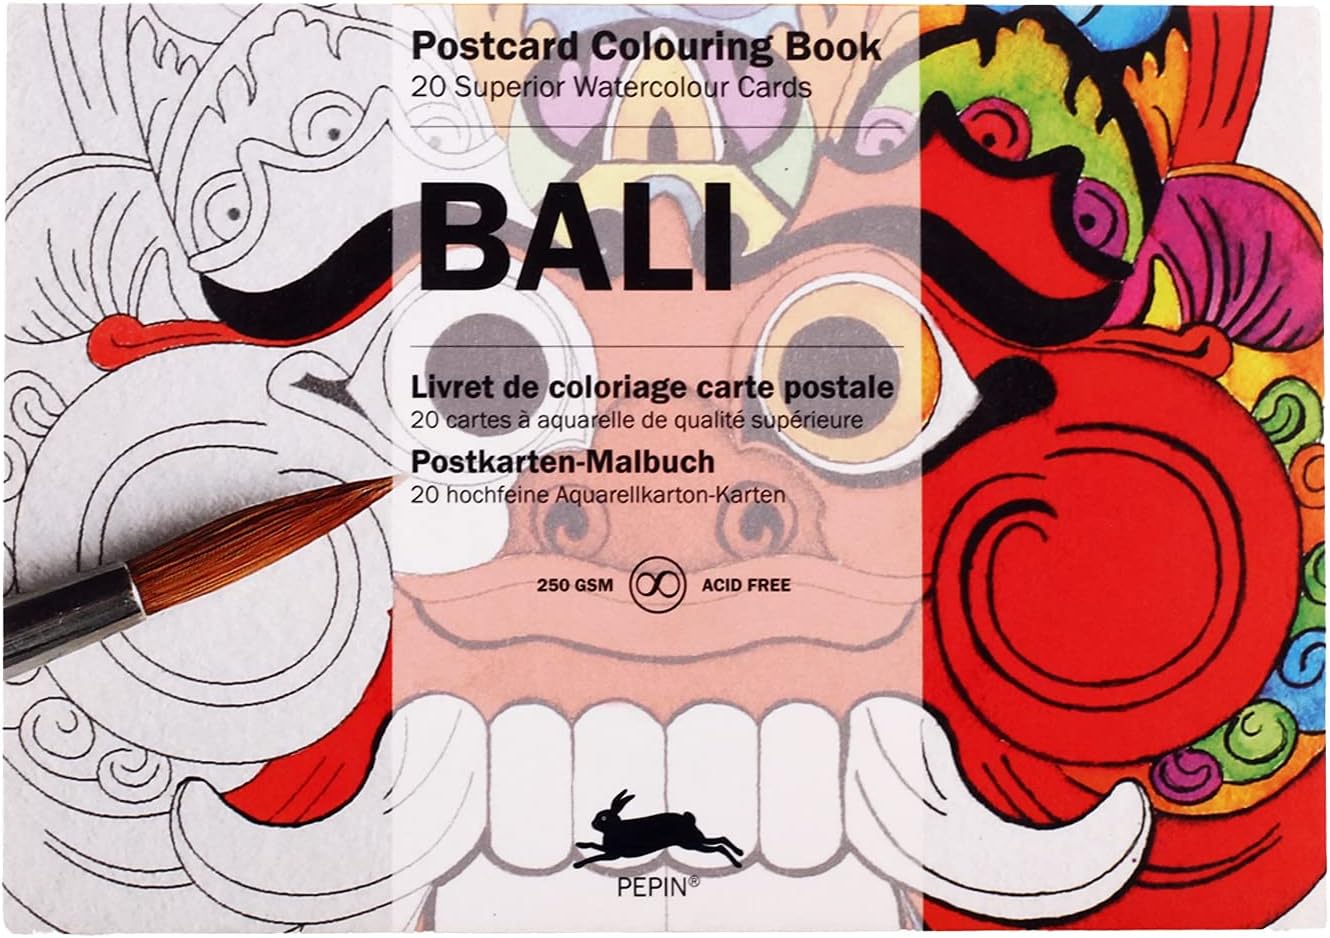 PEPIN Postcard Colouring Book Bali